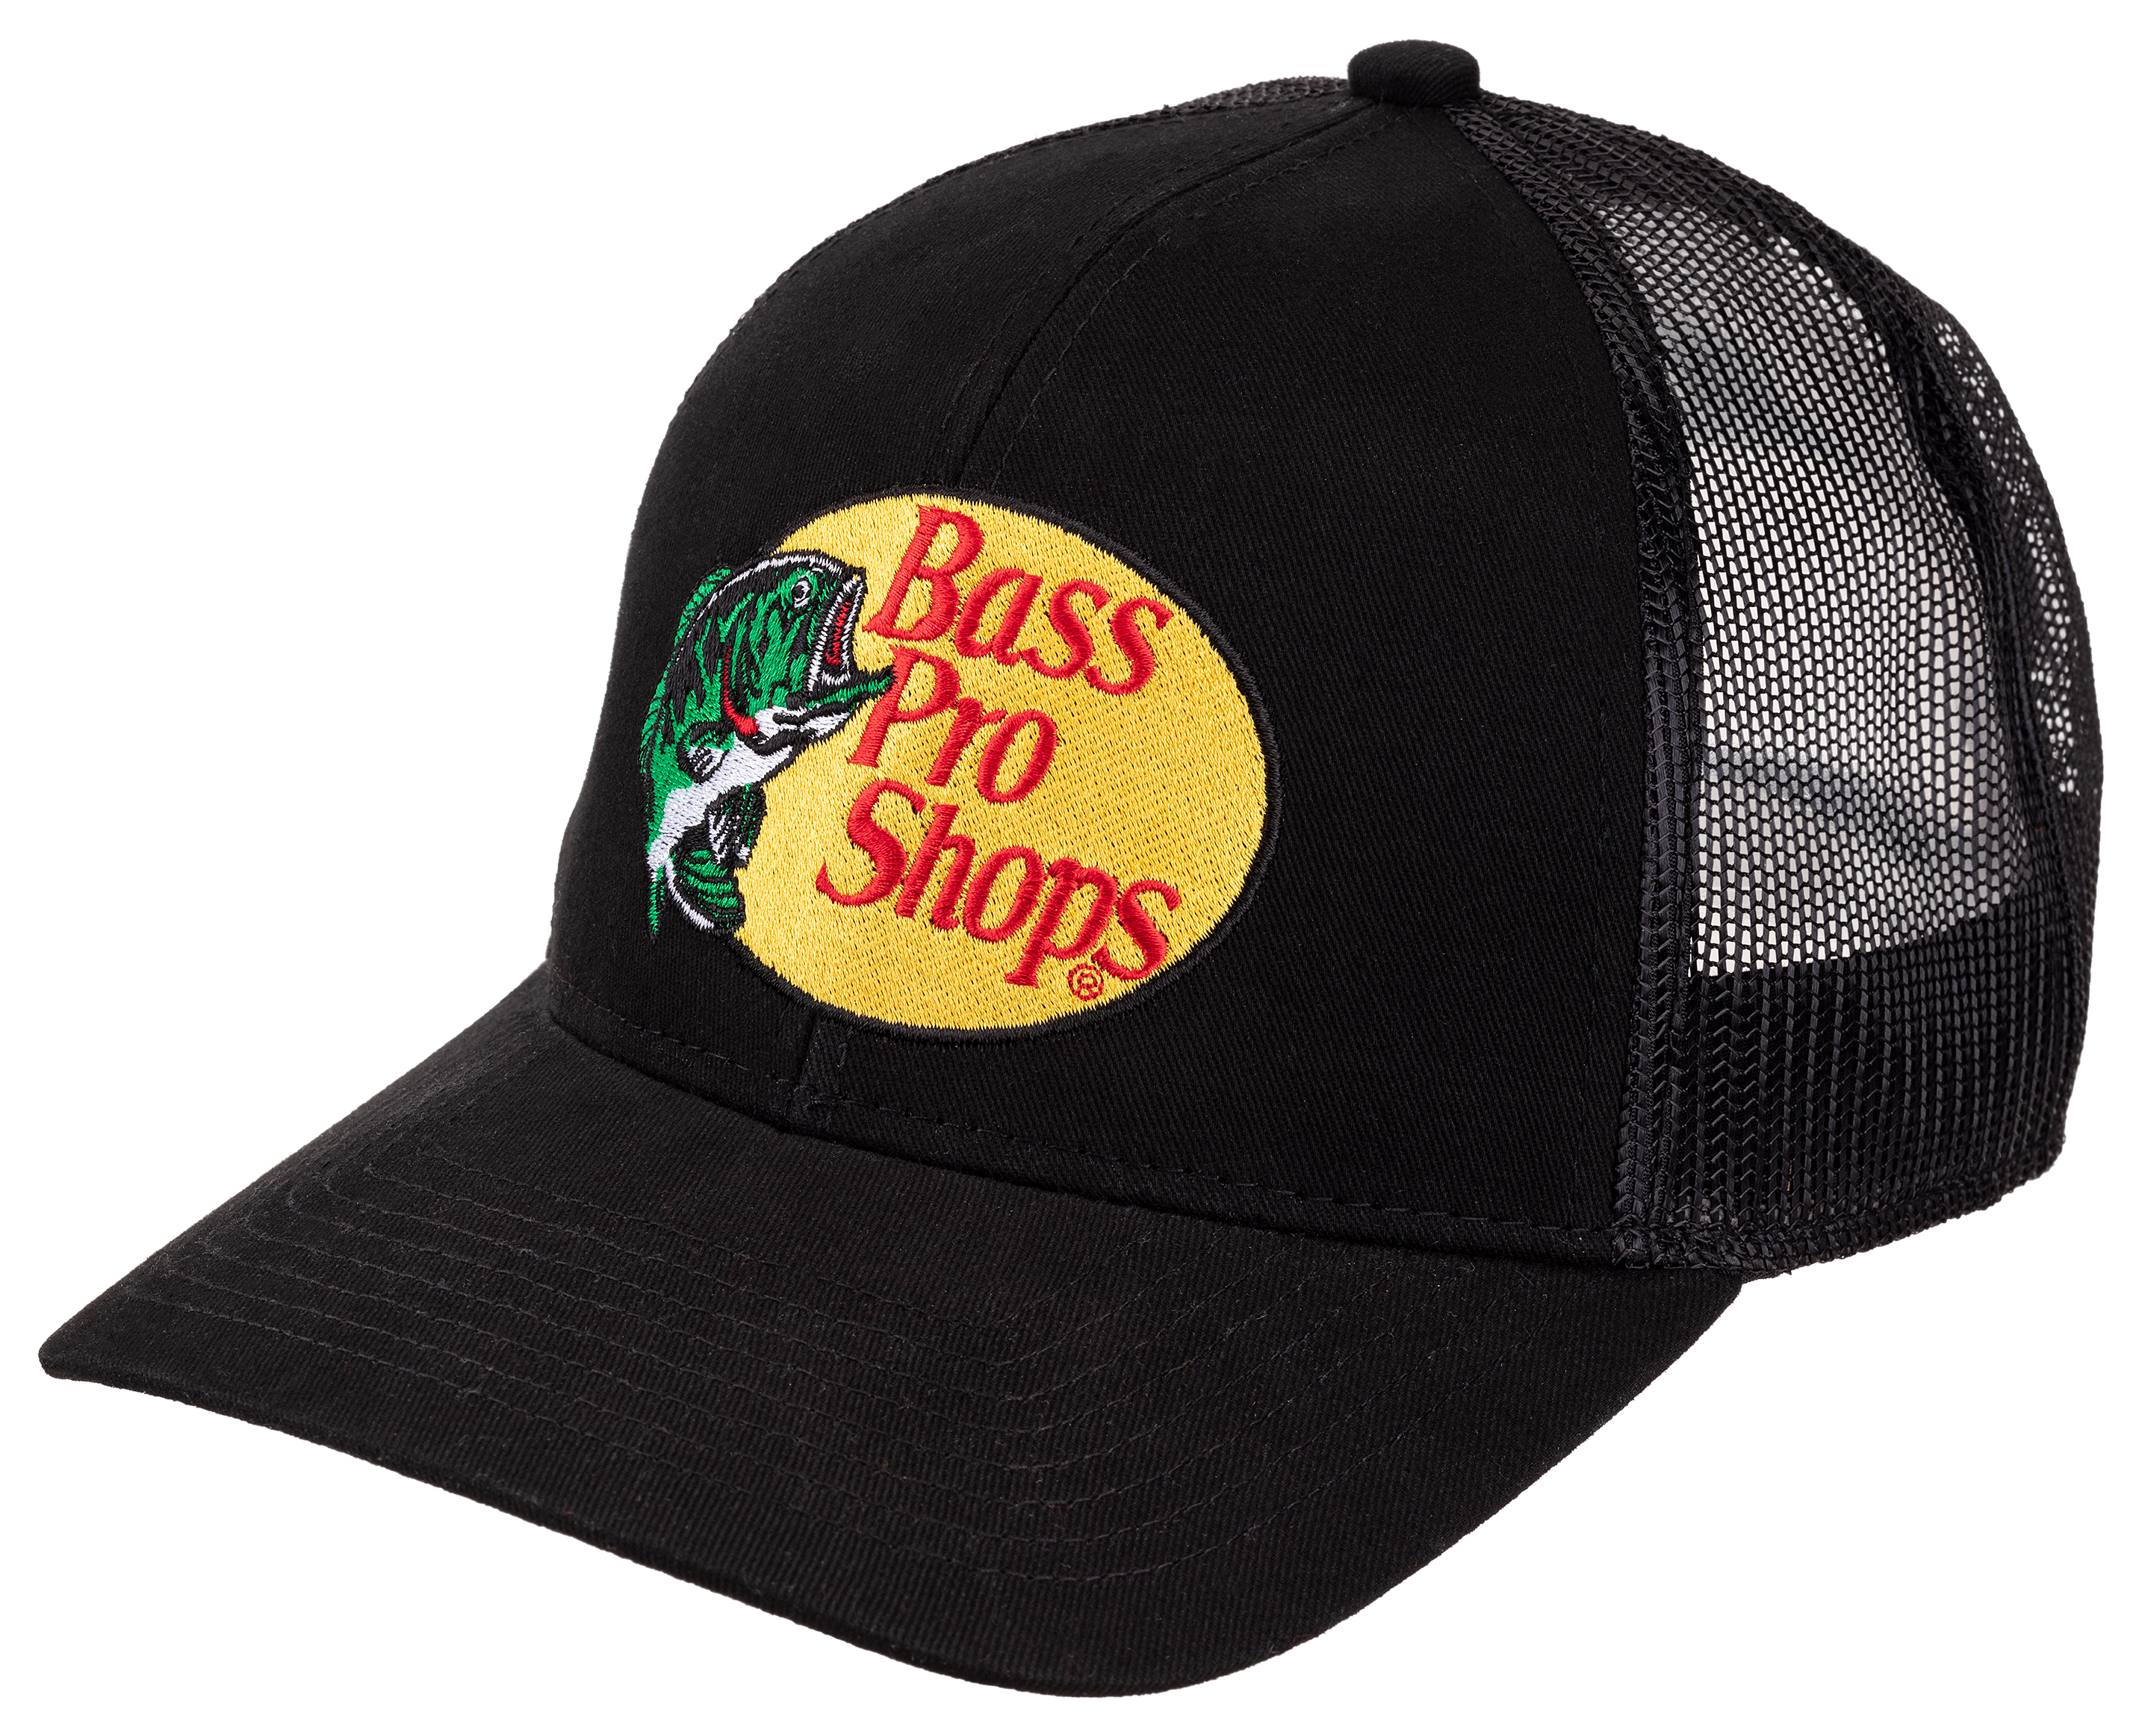 Bass Pro Shops Leaping Bass Logo Cap, 57% OFF